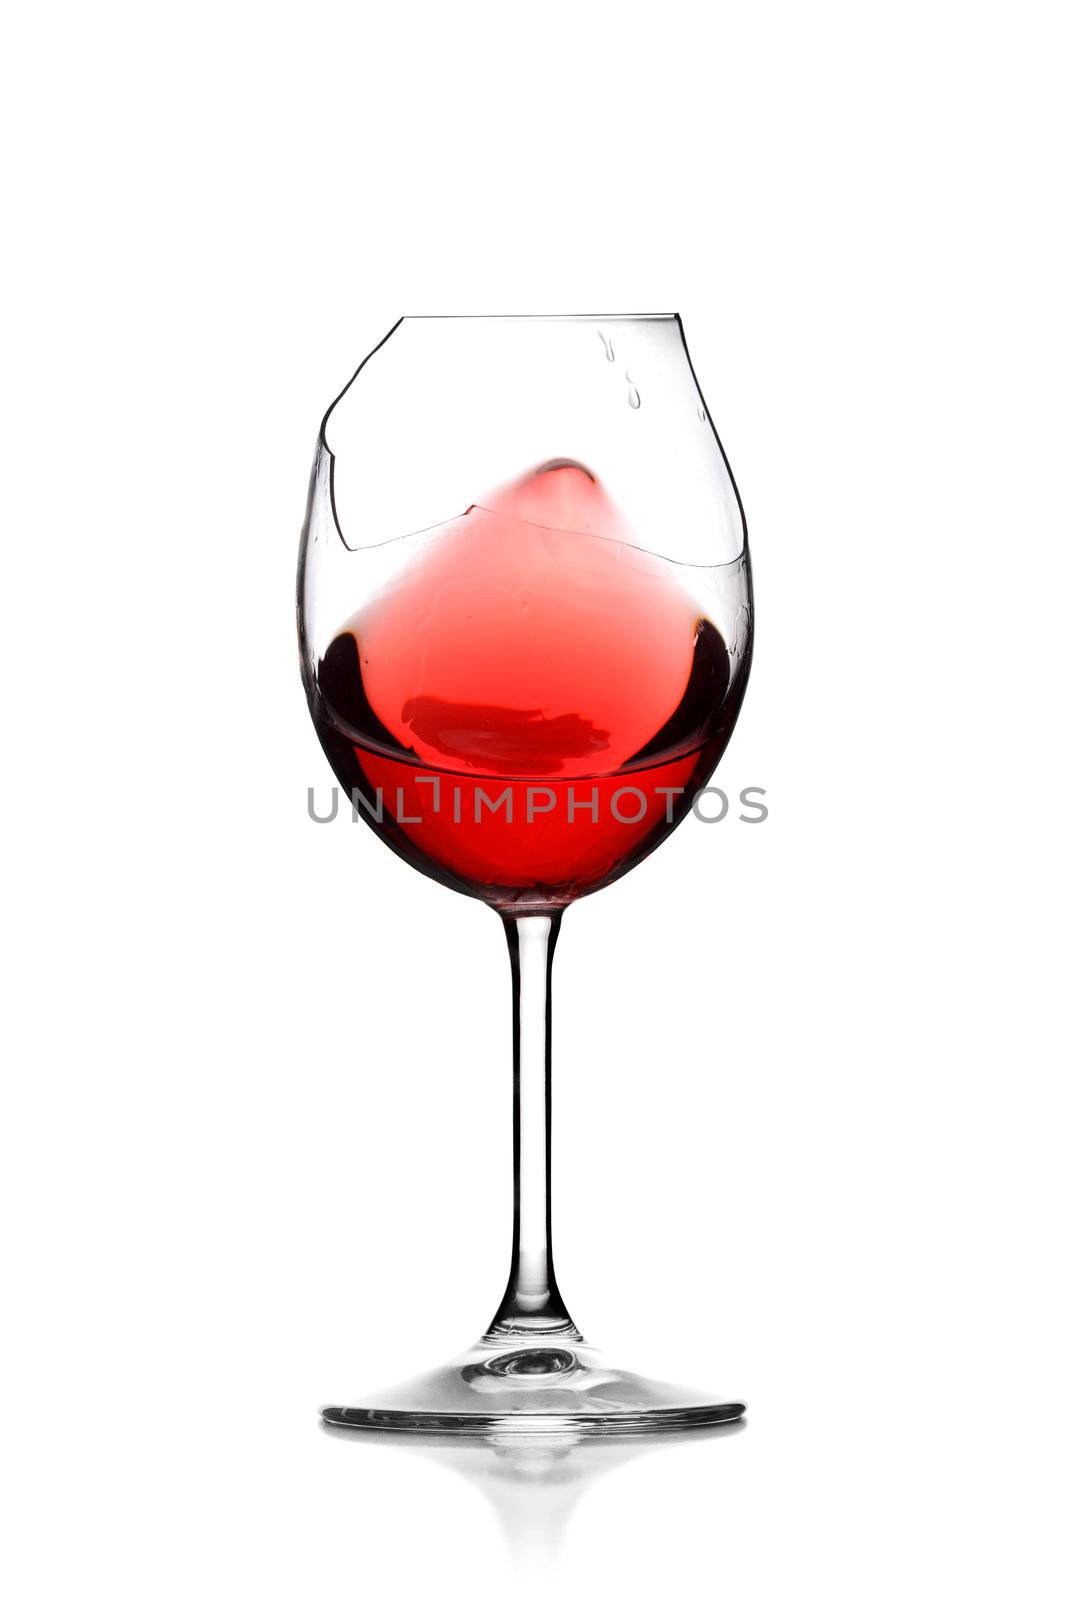 red wine in broken glass by kokimk